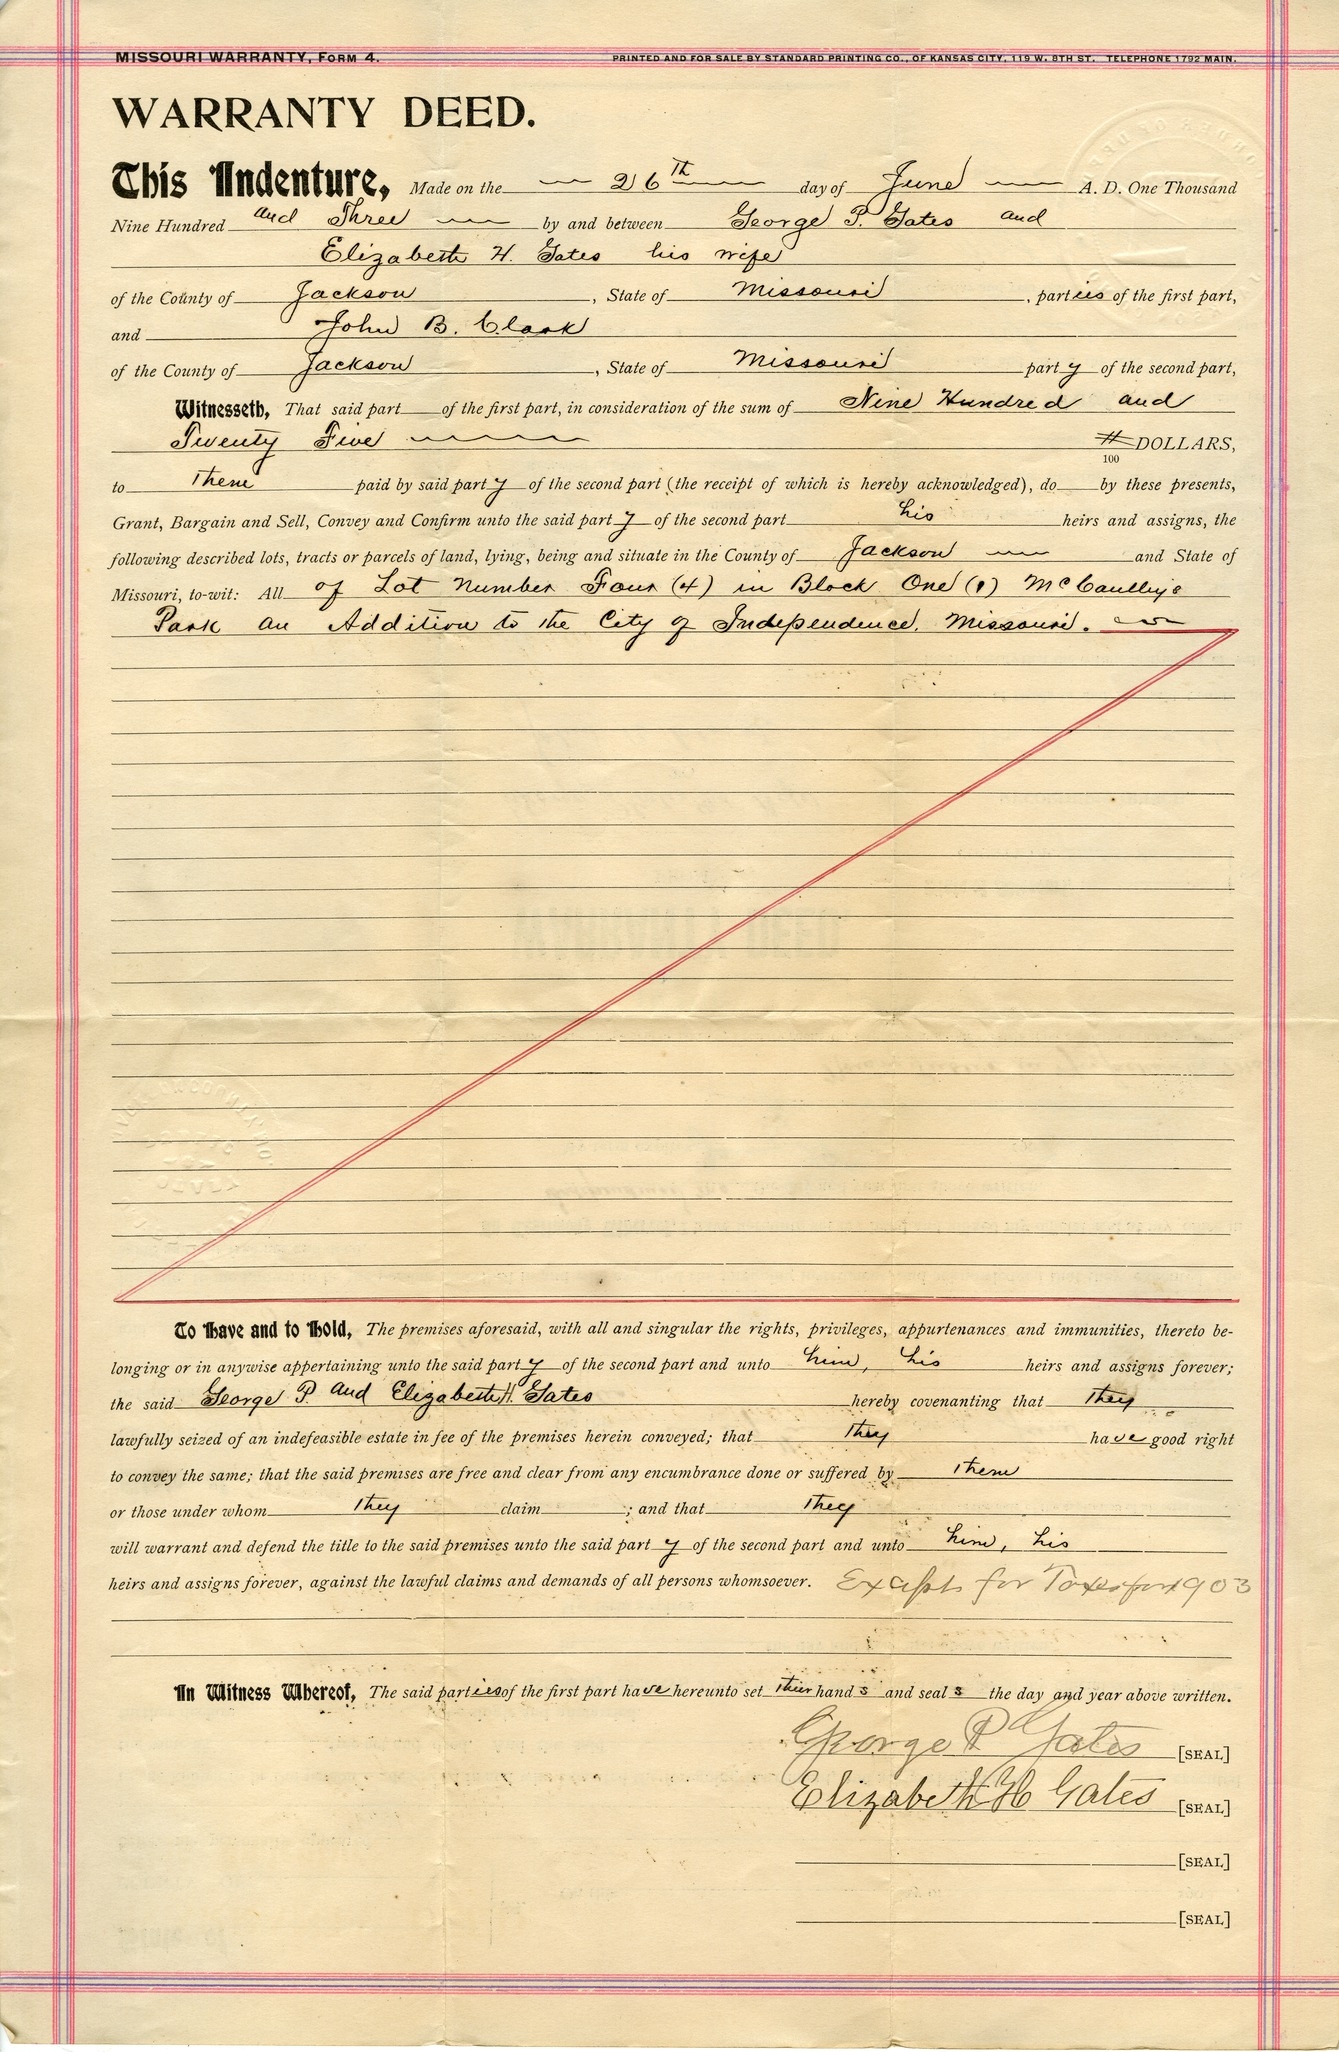 Warranty Deed from George P. Gates and Elizabeth H. Gates to John B. Clark